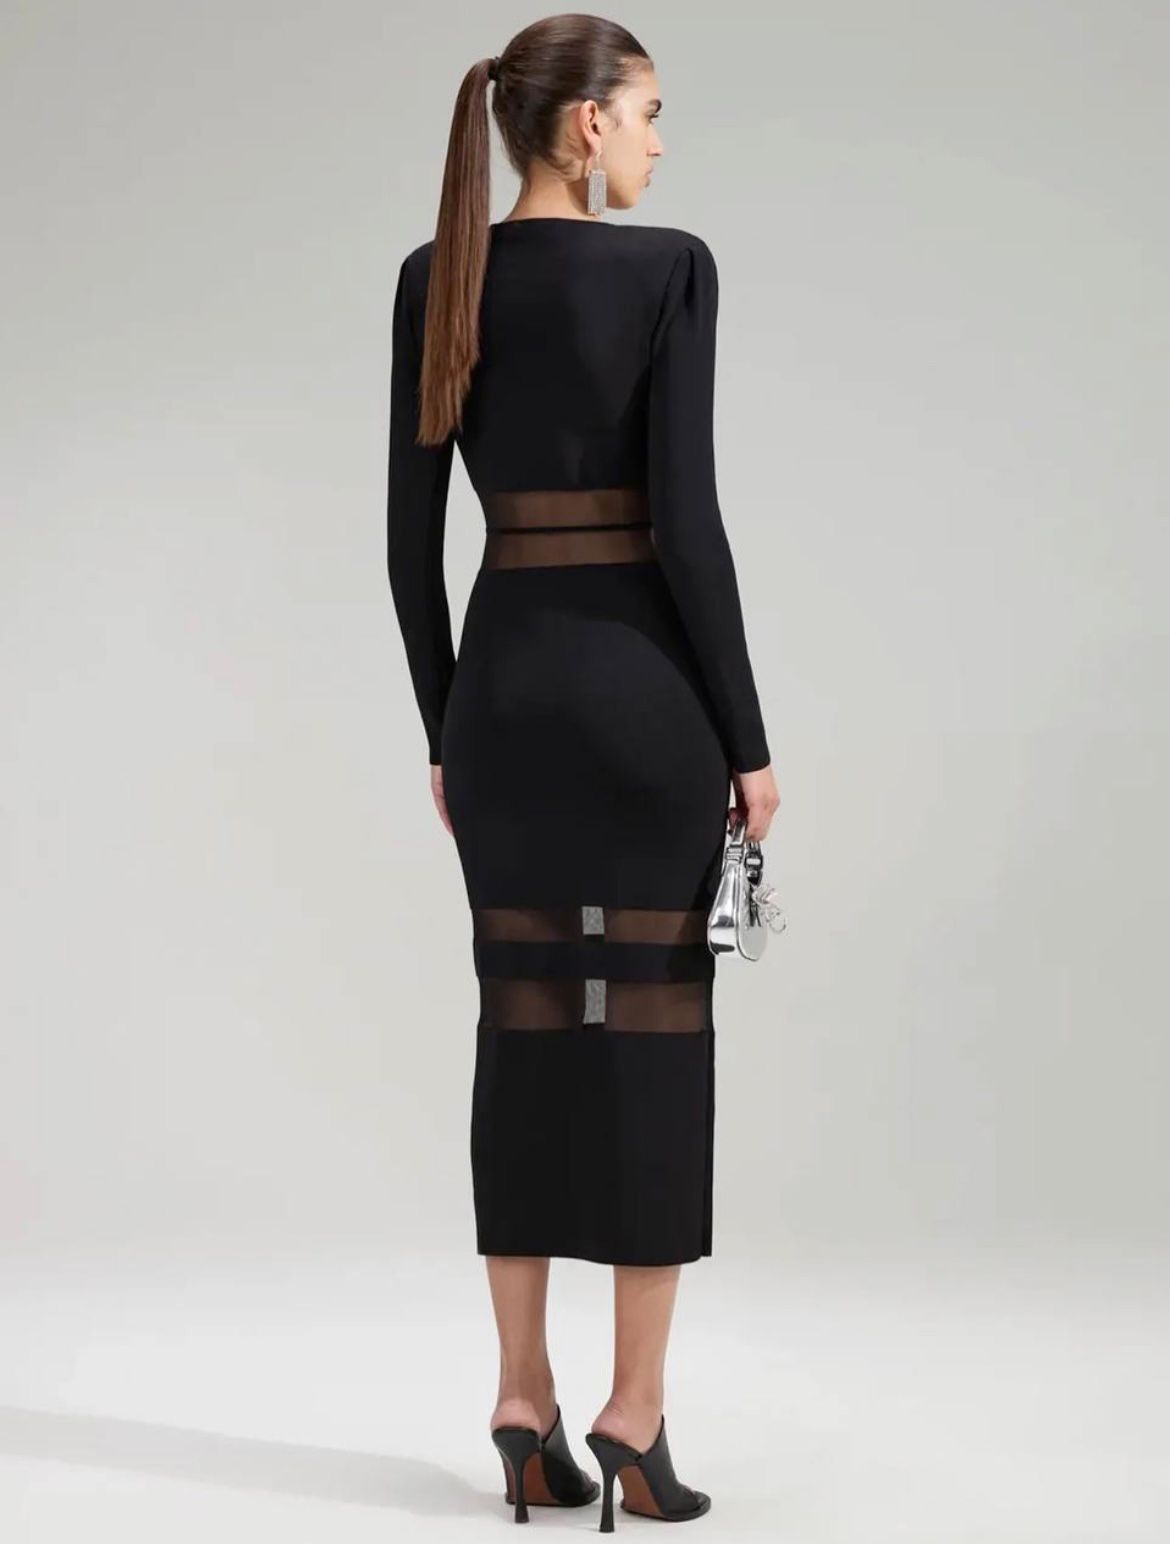 Black stretchy midi dress